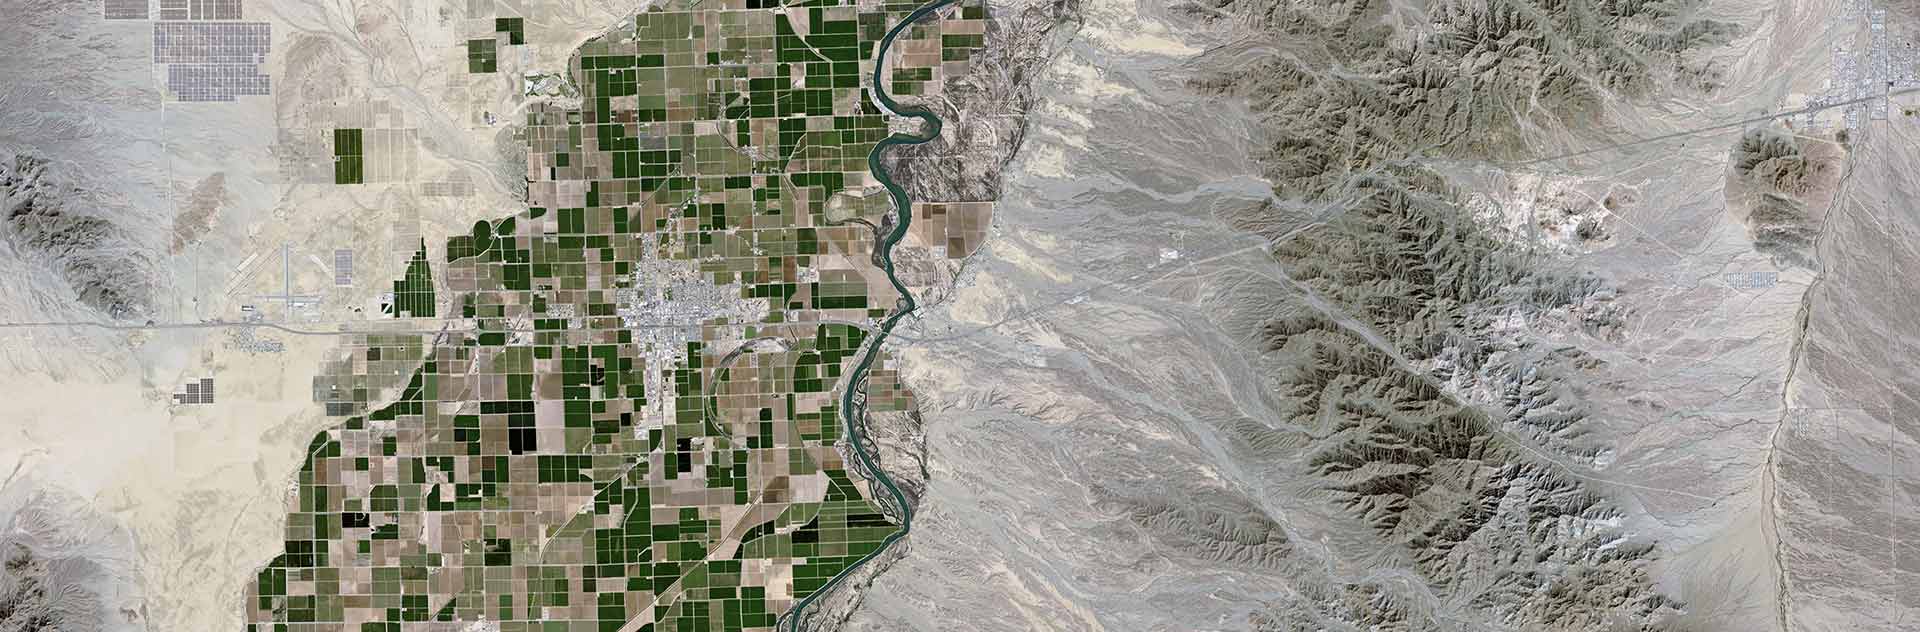 SPOT 6/7 satellite image - California -USA